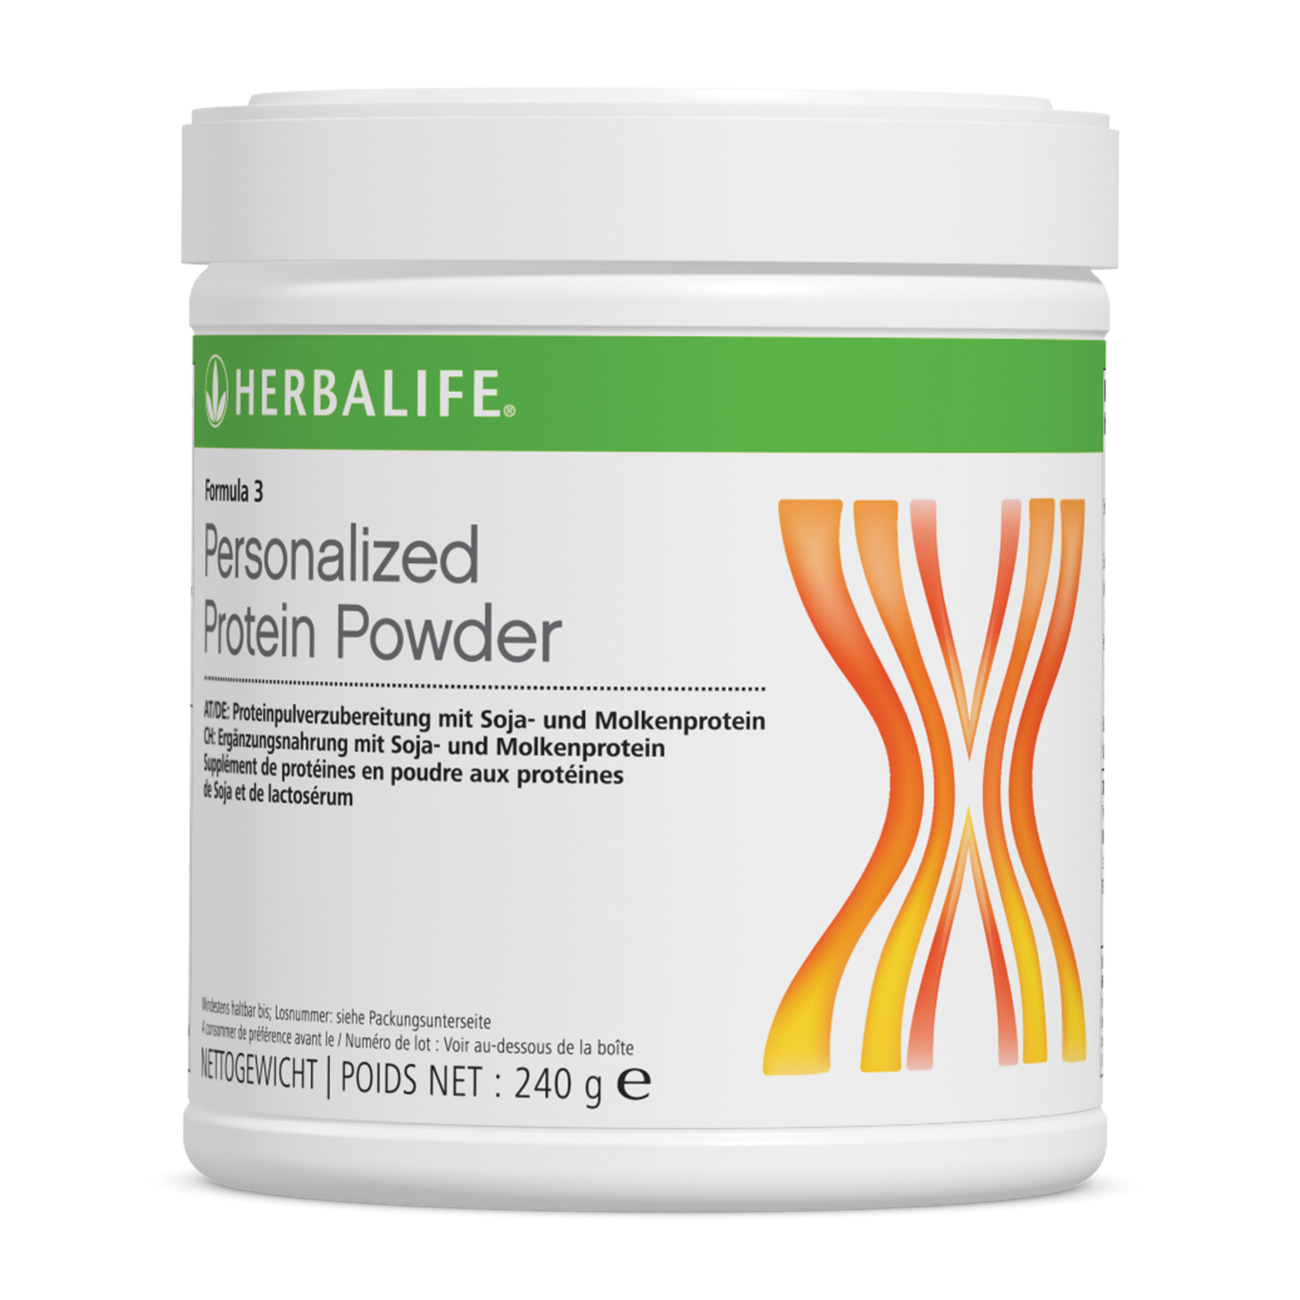 Formula 3 Personalised Protein Powder – image de produit